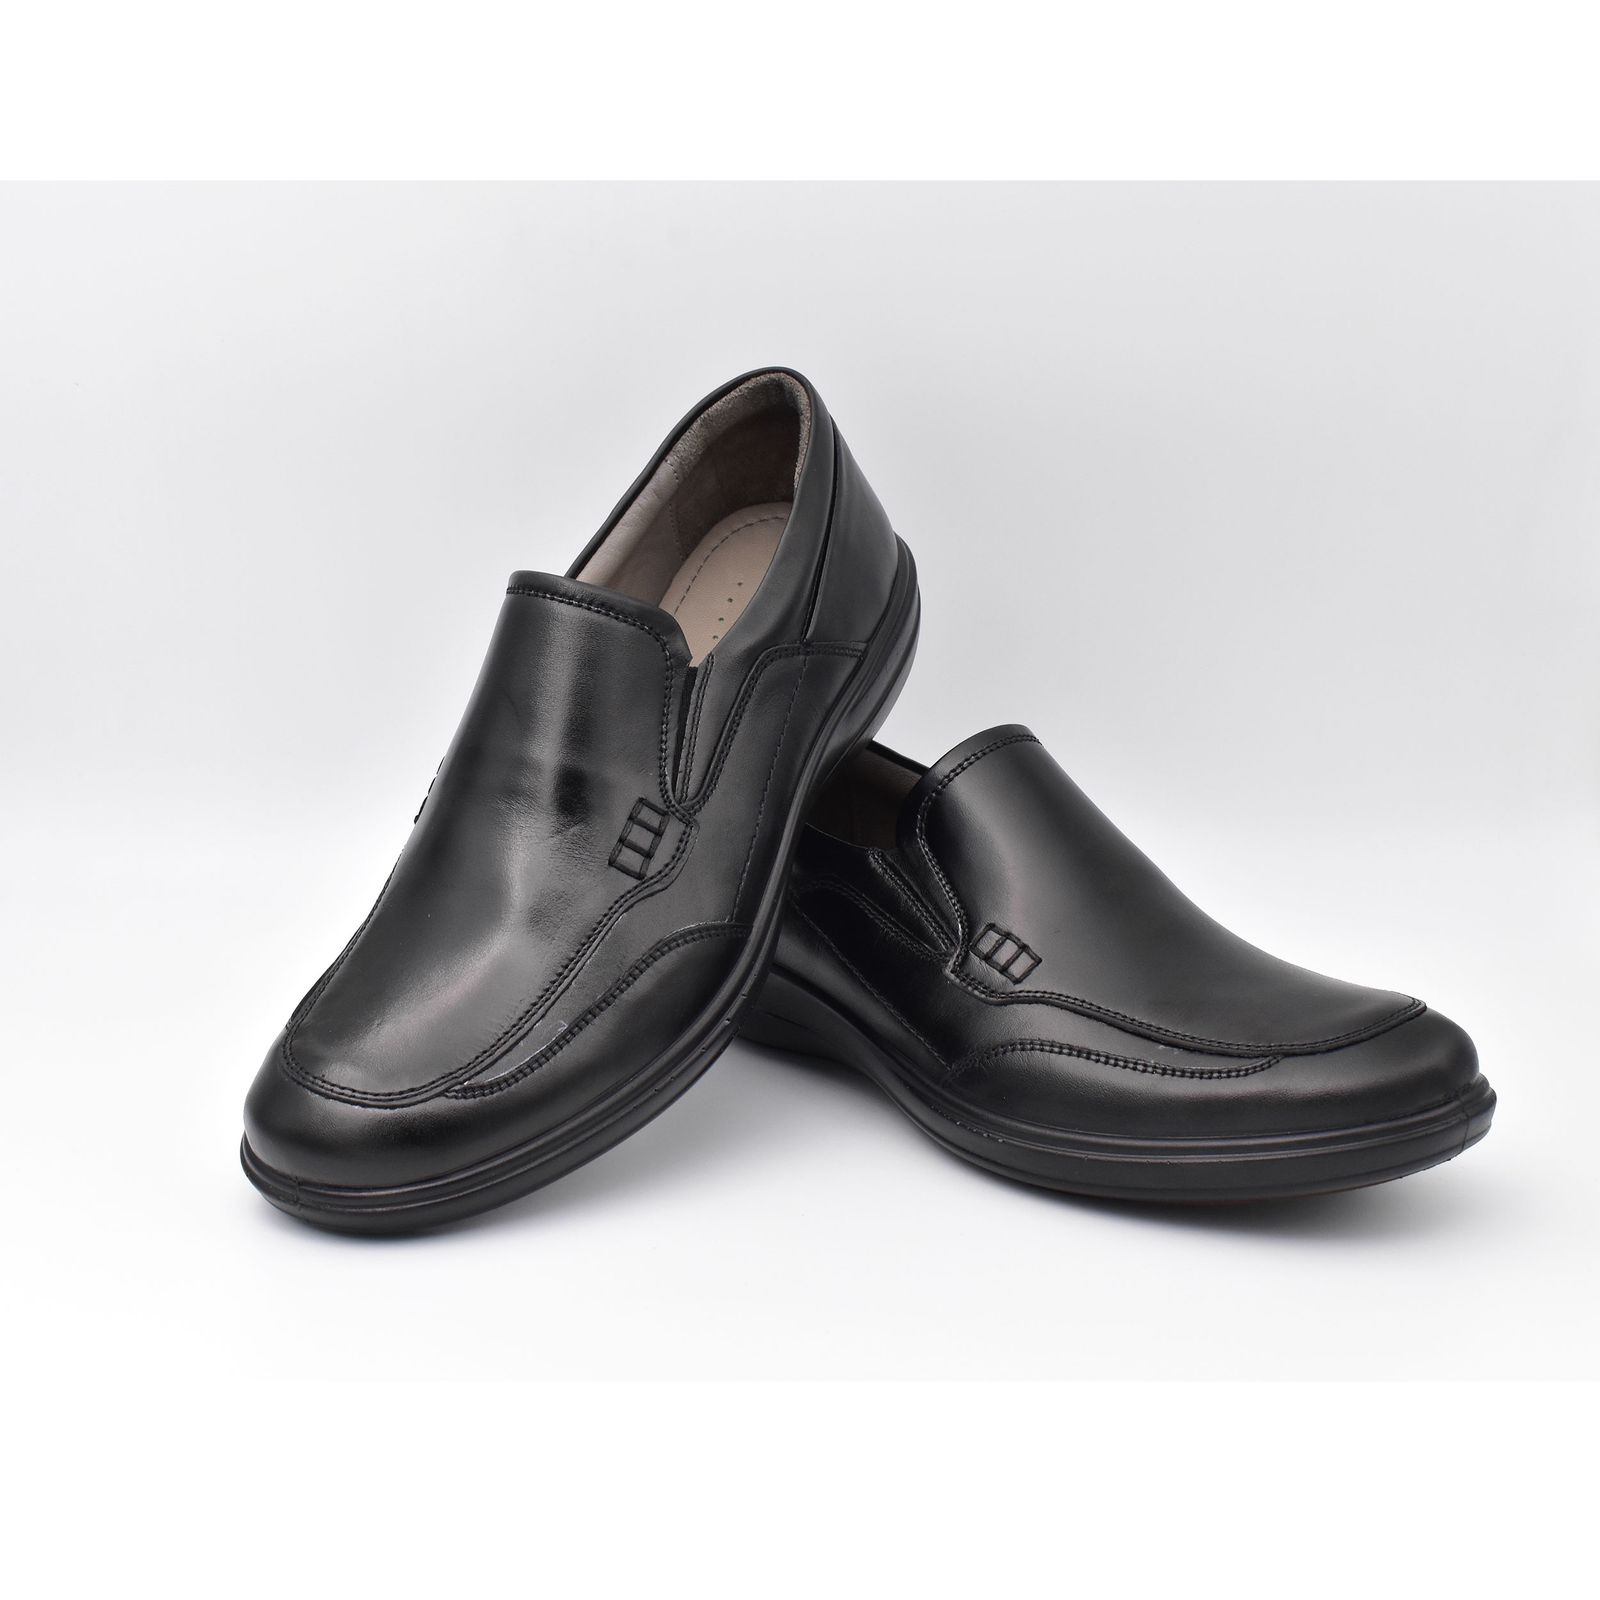 کفش روزمره مردانه پاما مدل TW کد G1122 -  - 7